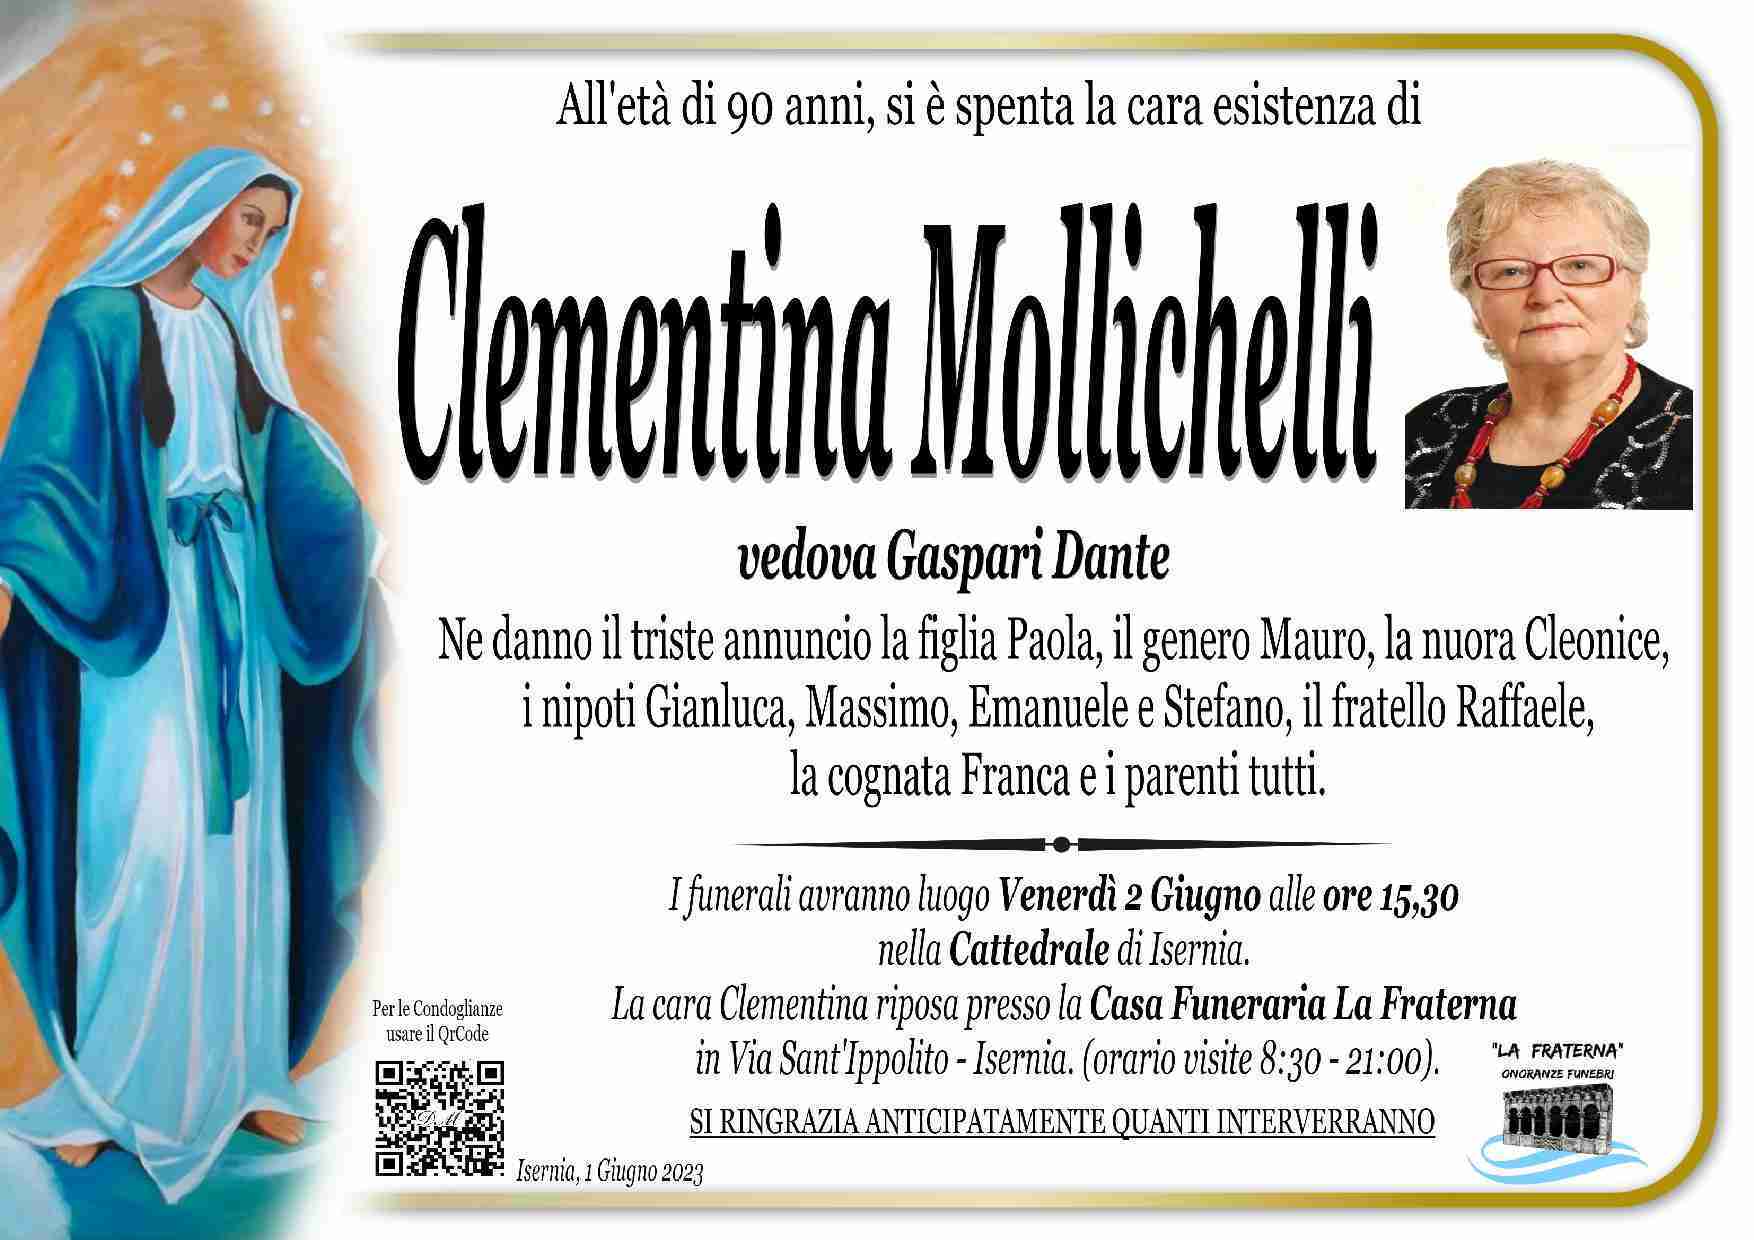 Clementina Mollichelli